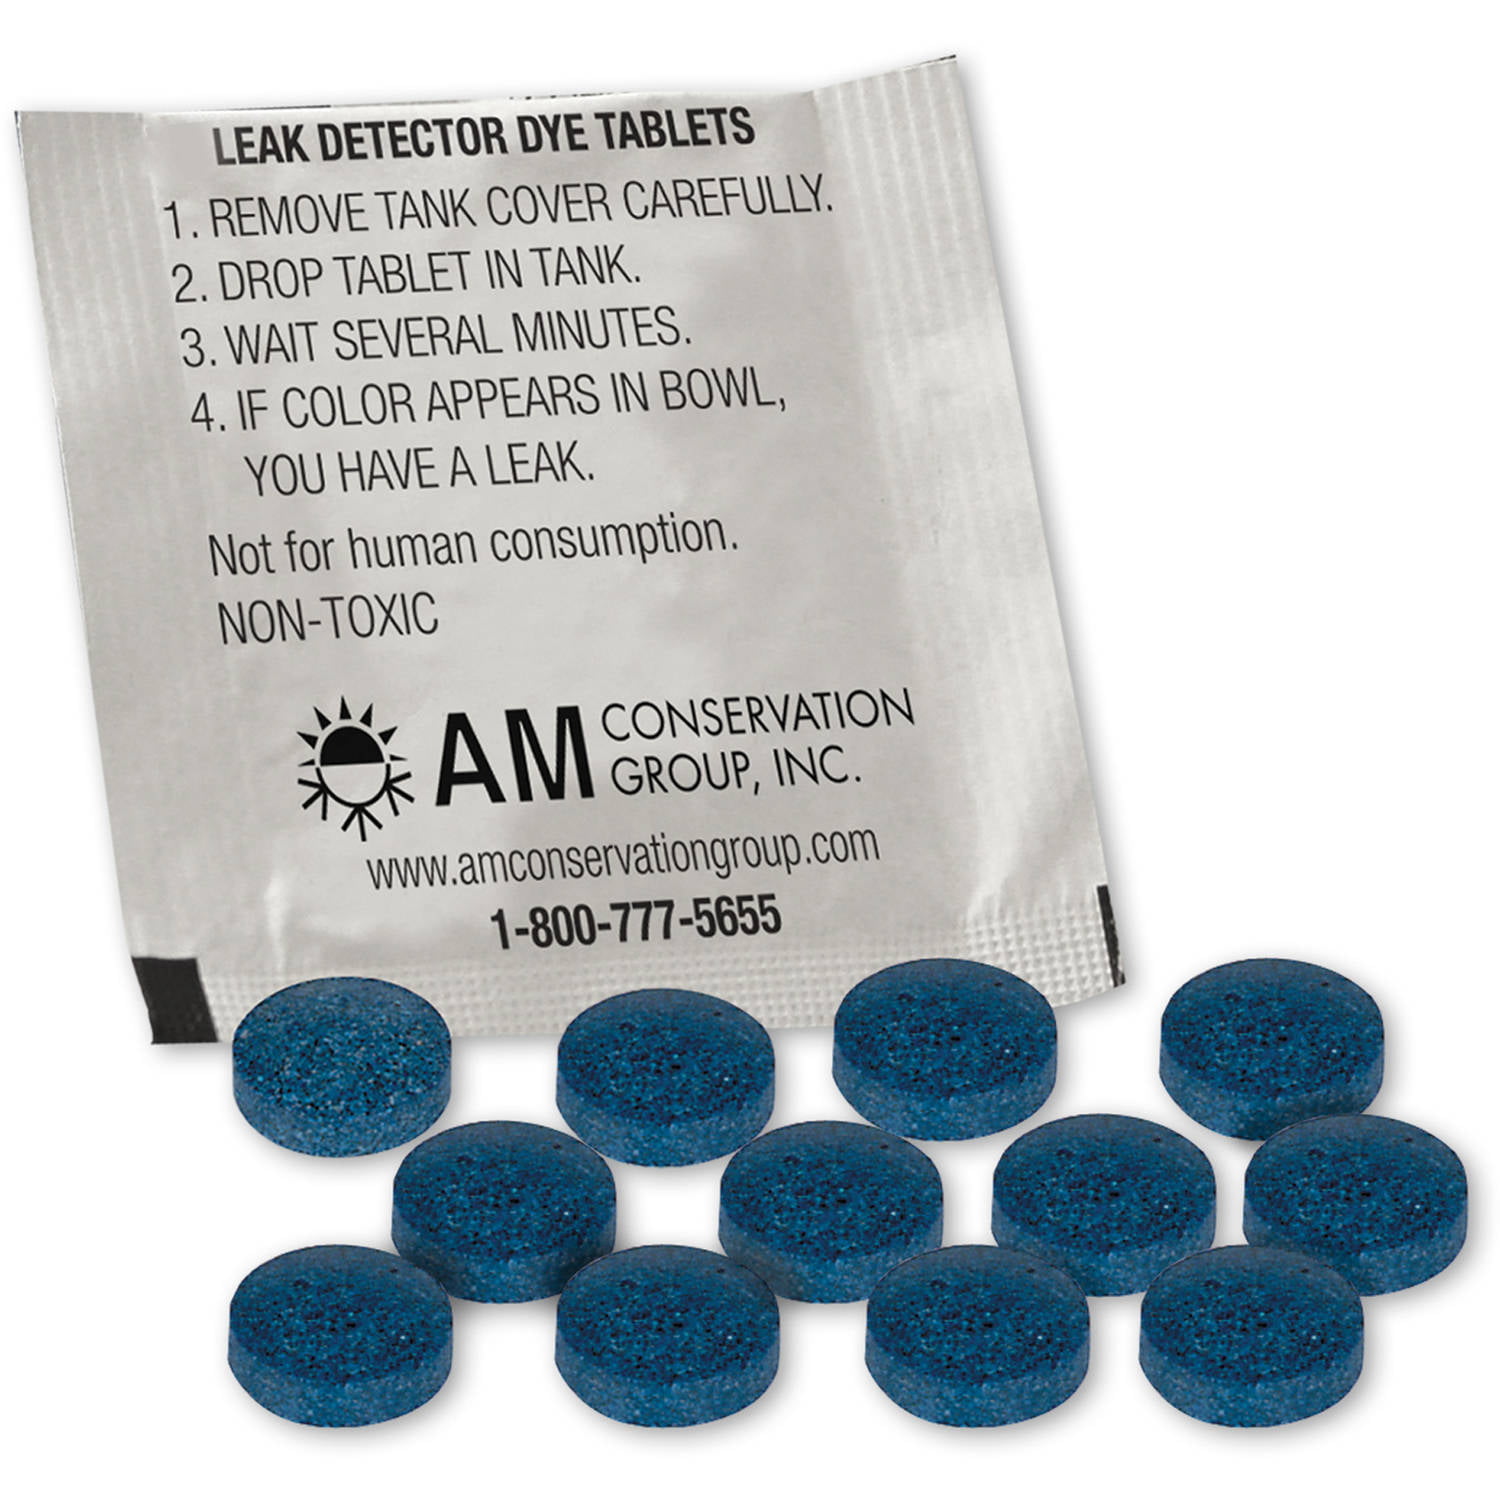 Rapid Blue Dissolvable Blue Dye Tablets for Toilet/Pool Leak Detection,  Adulteration Prevention - 200 Tablets Per Bottle